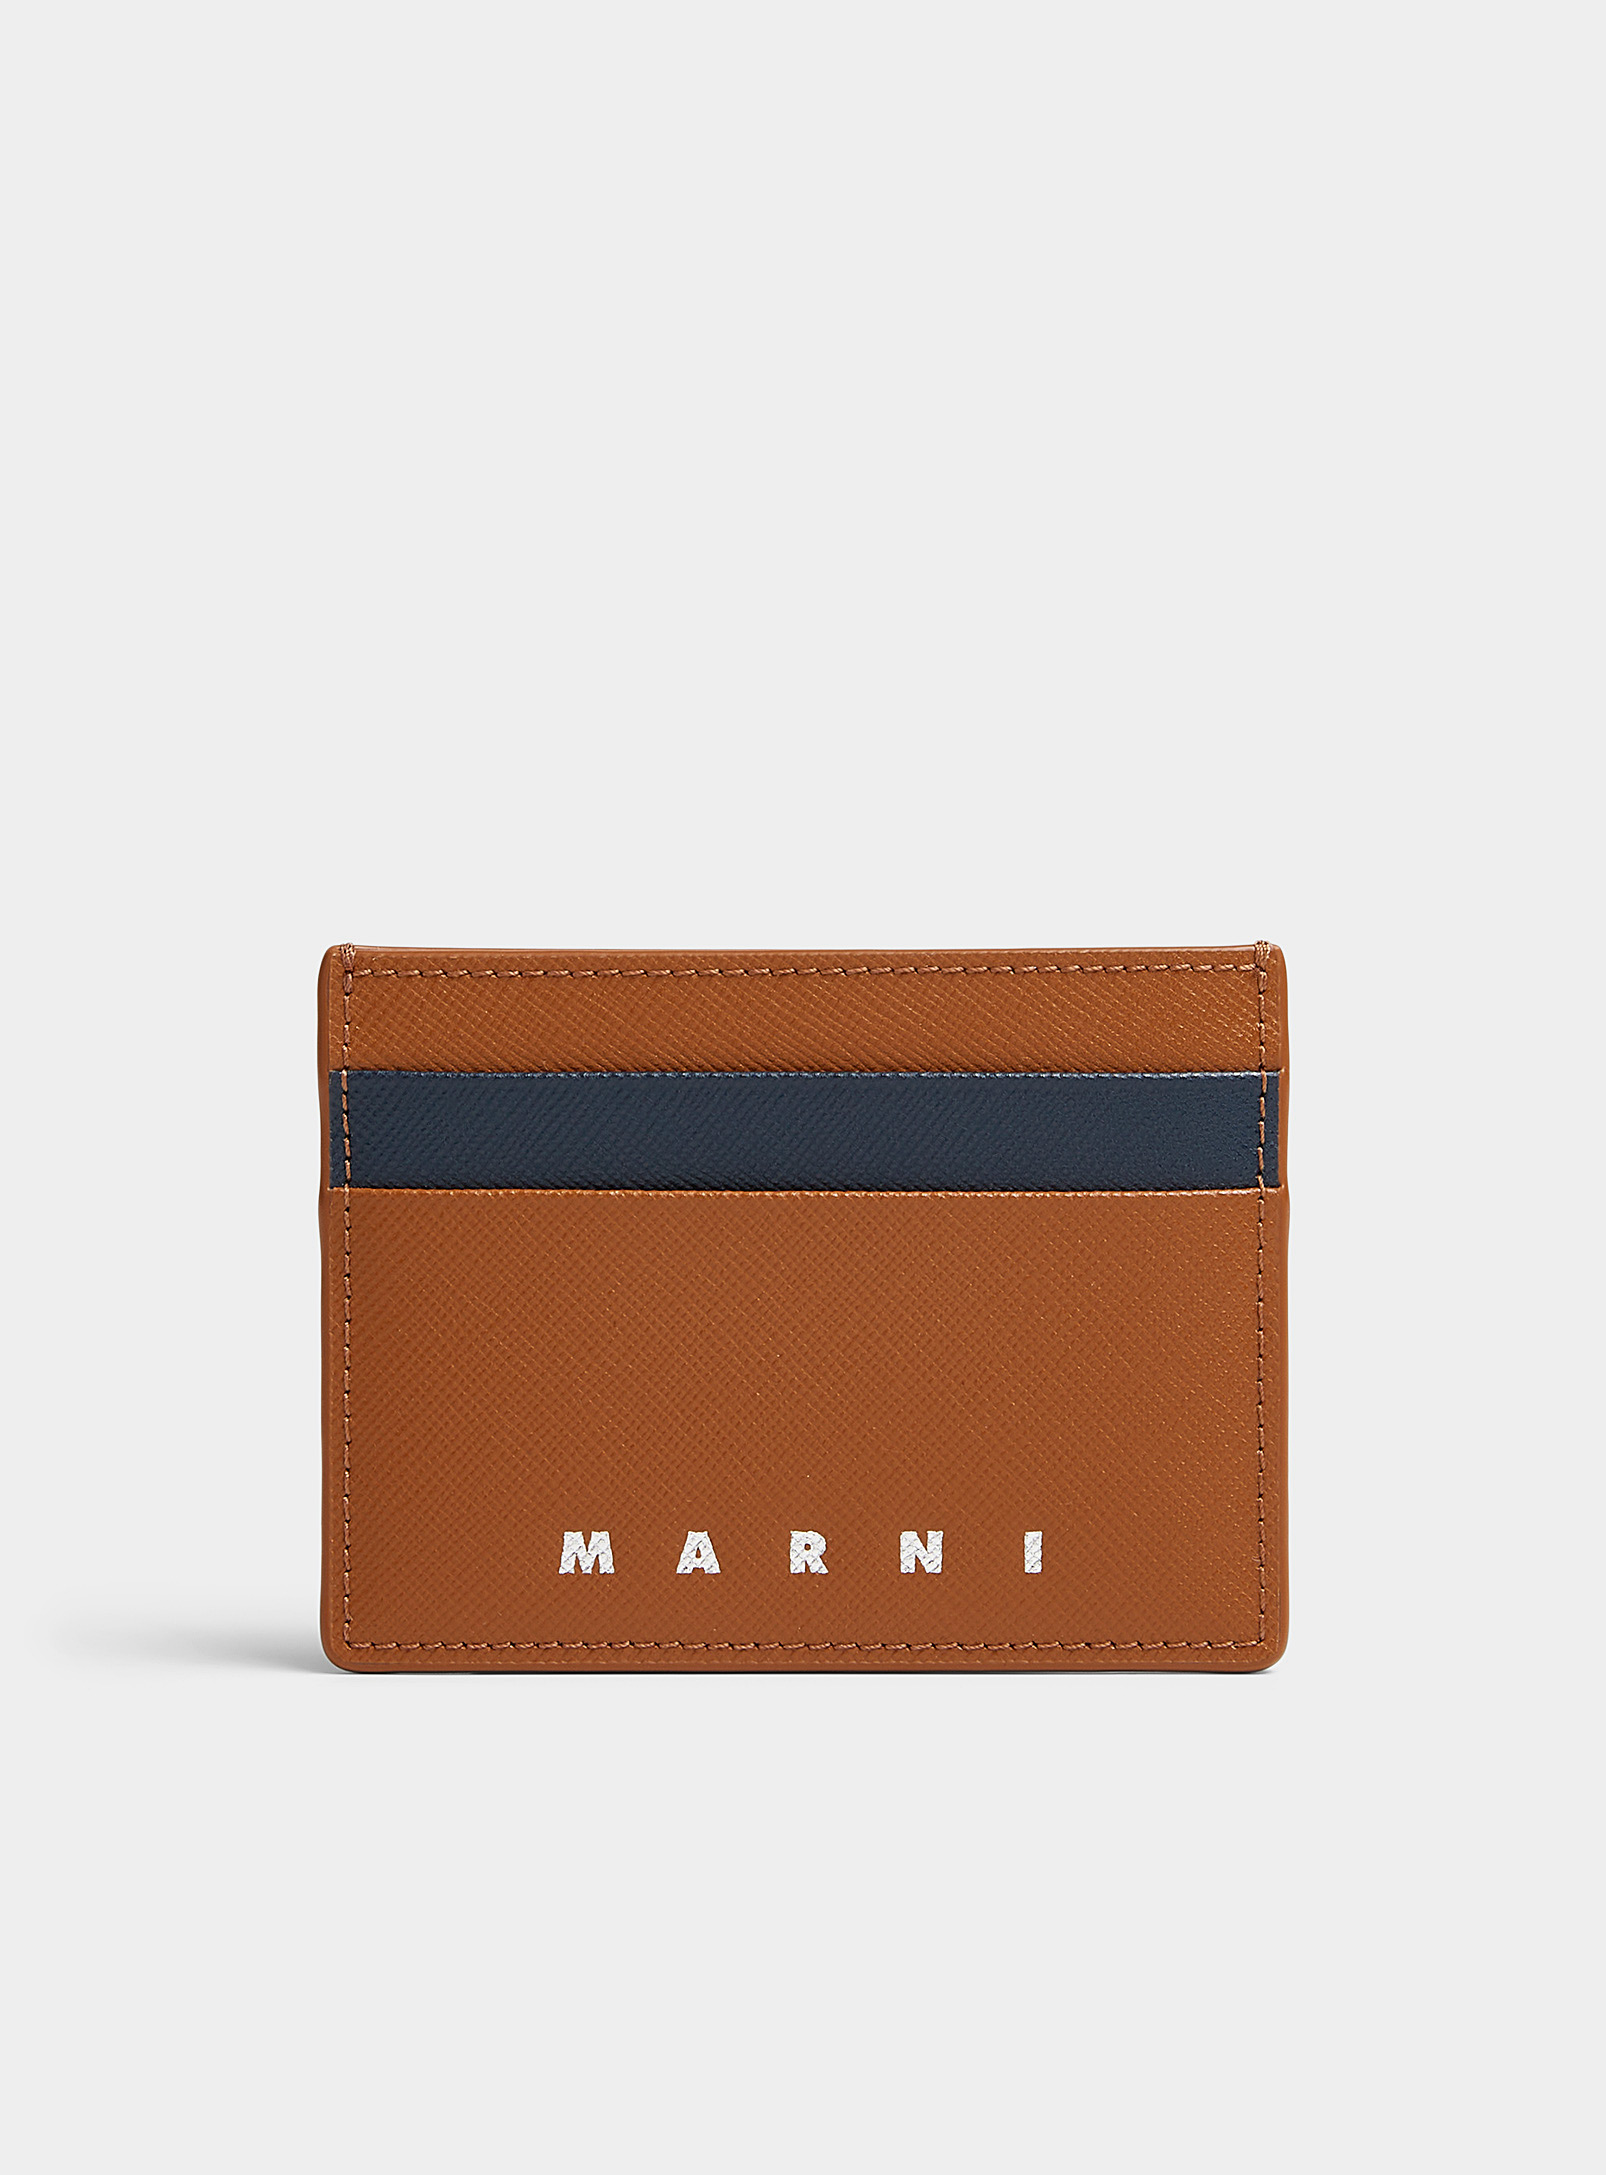 MARNI - Men's Two-tone card case